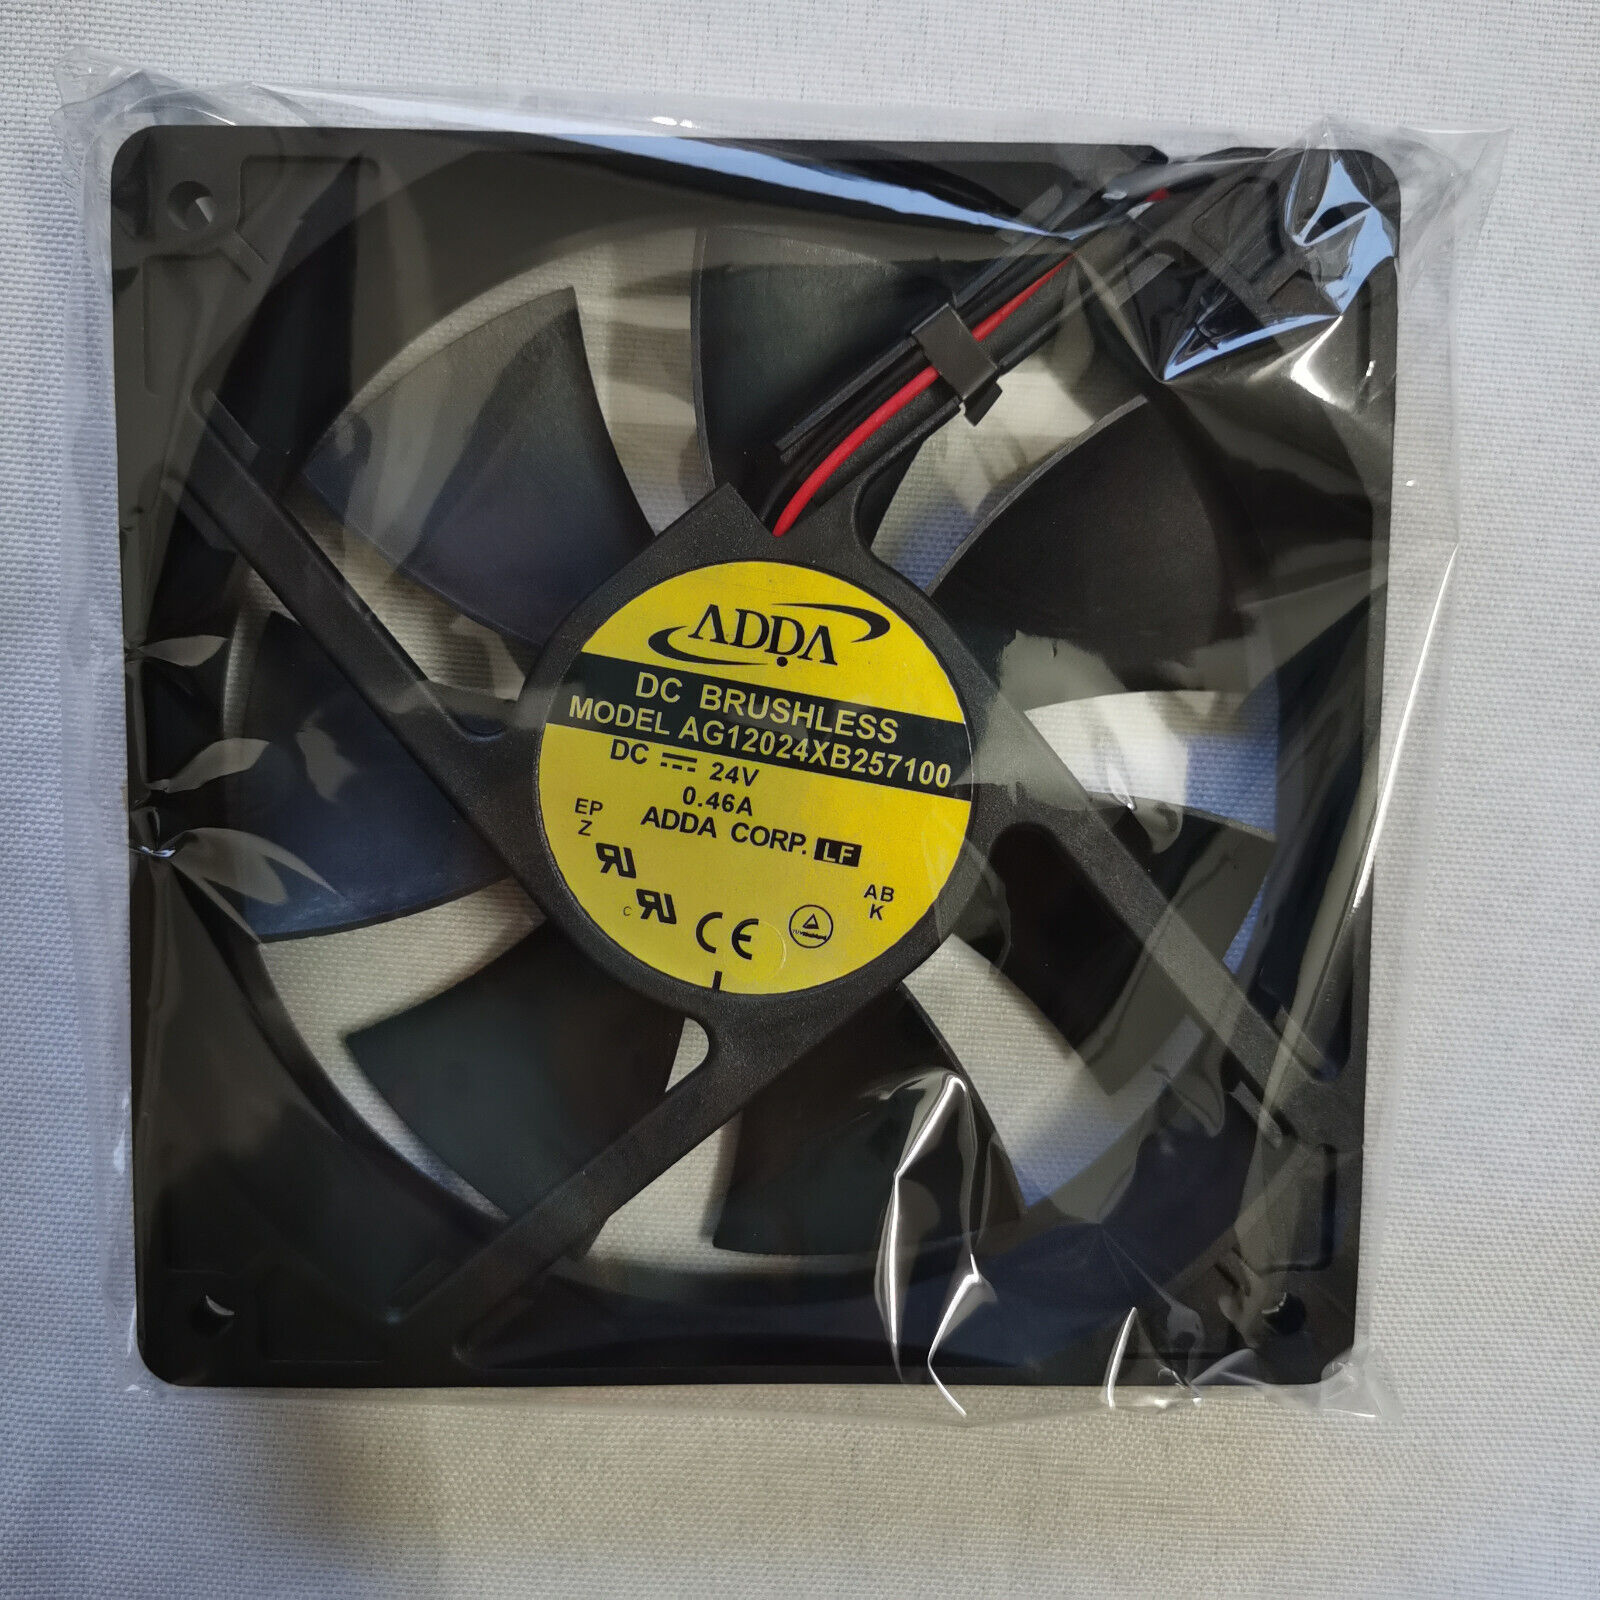 ADDA 12012025MM AG12024XB257100 24V 0.46A 2Wire 12cm Inverter Fan